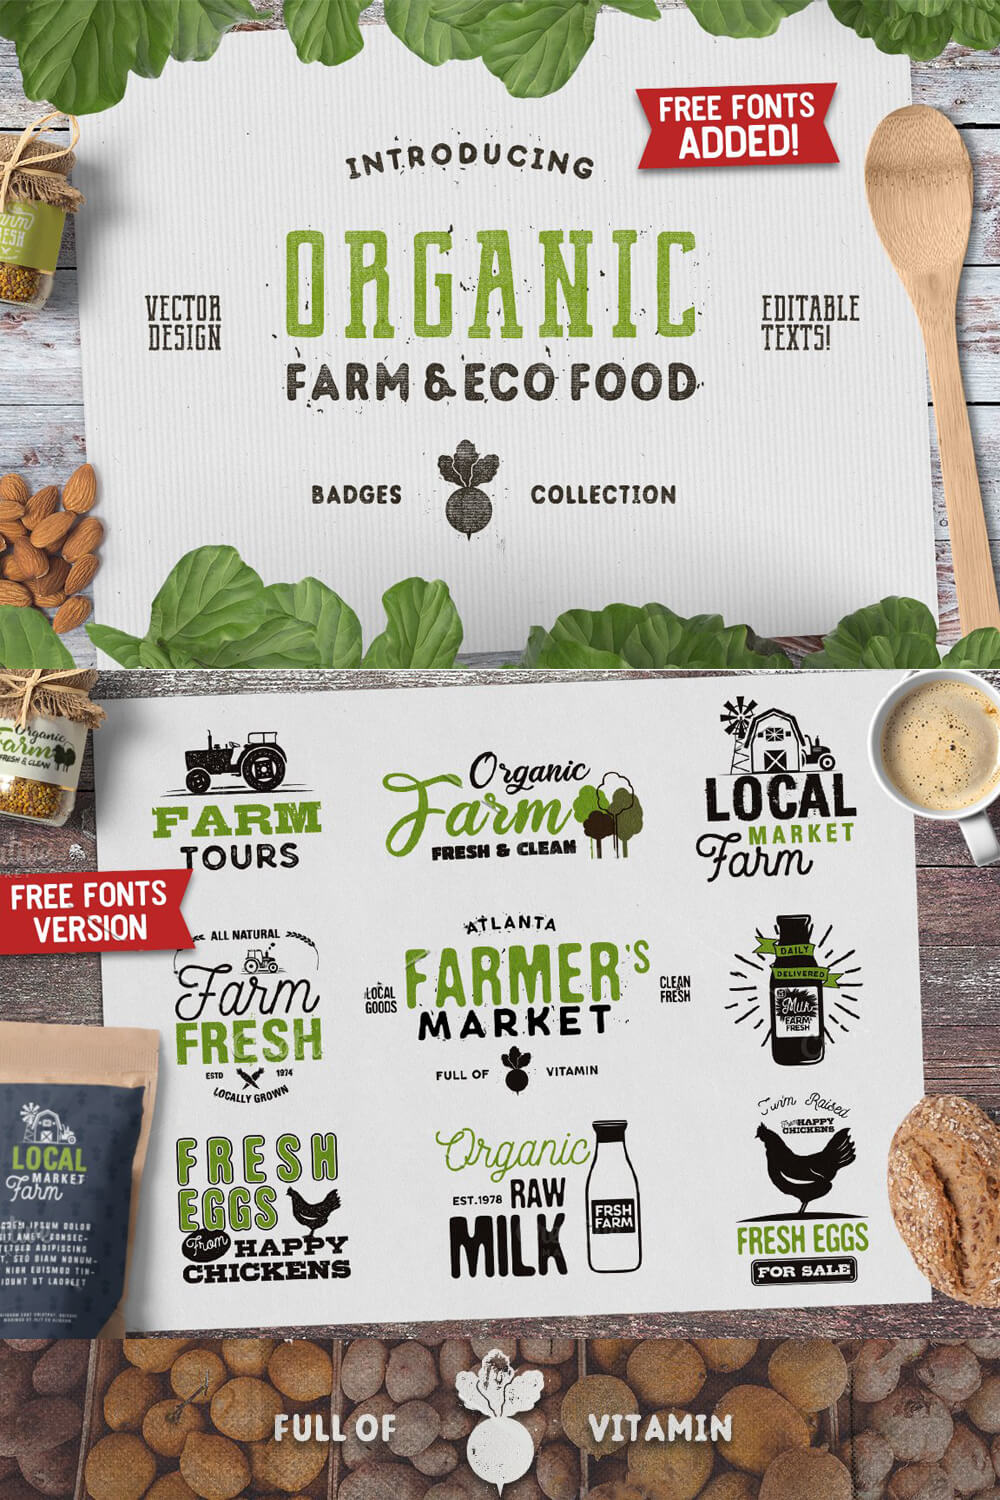 Organic farm and eco food.